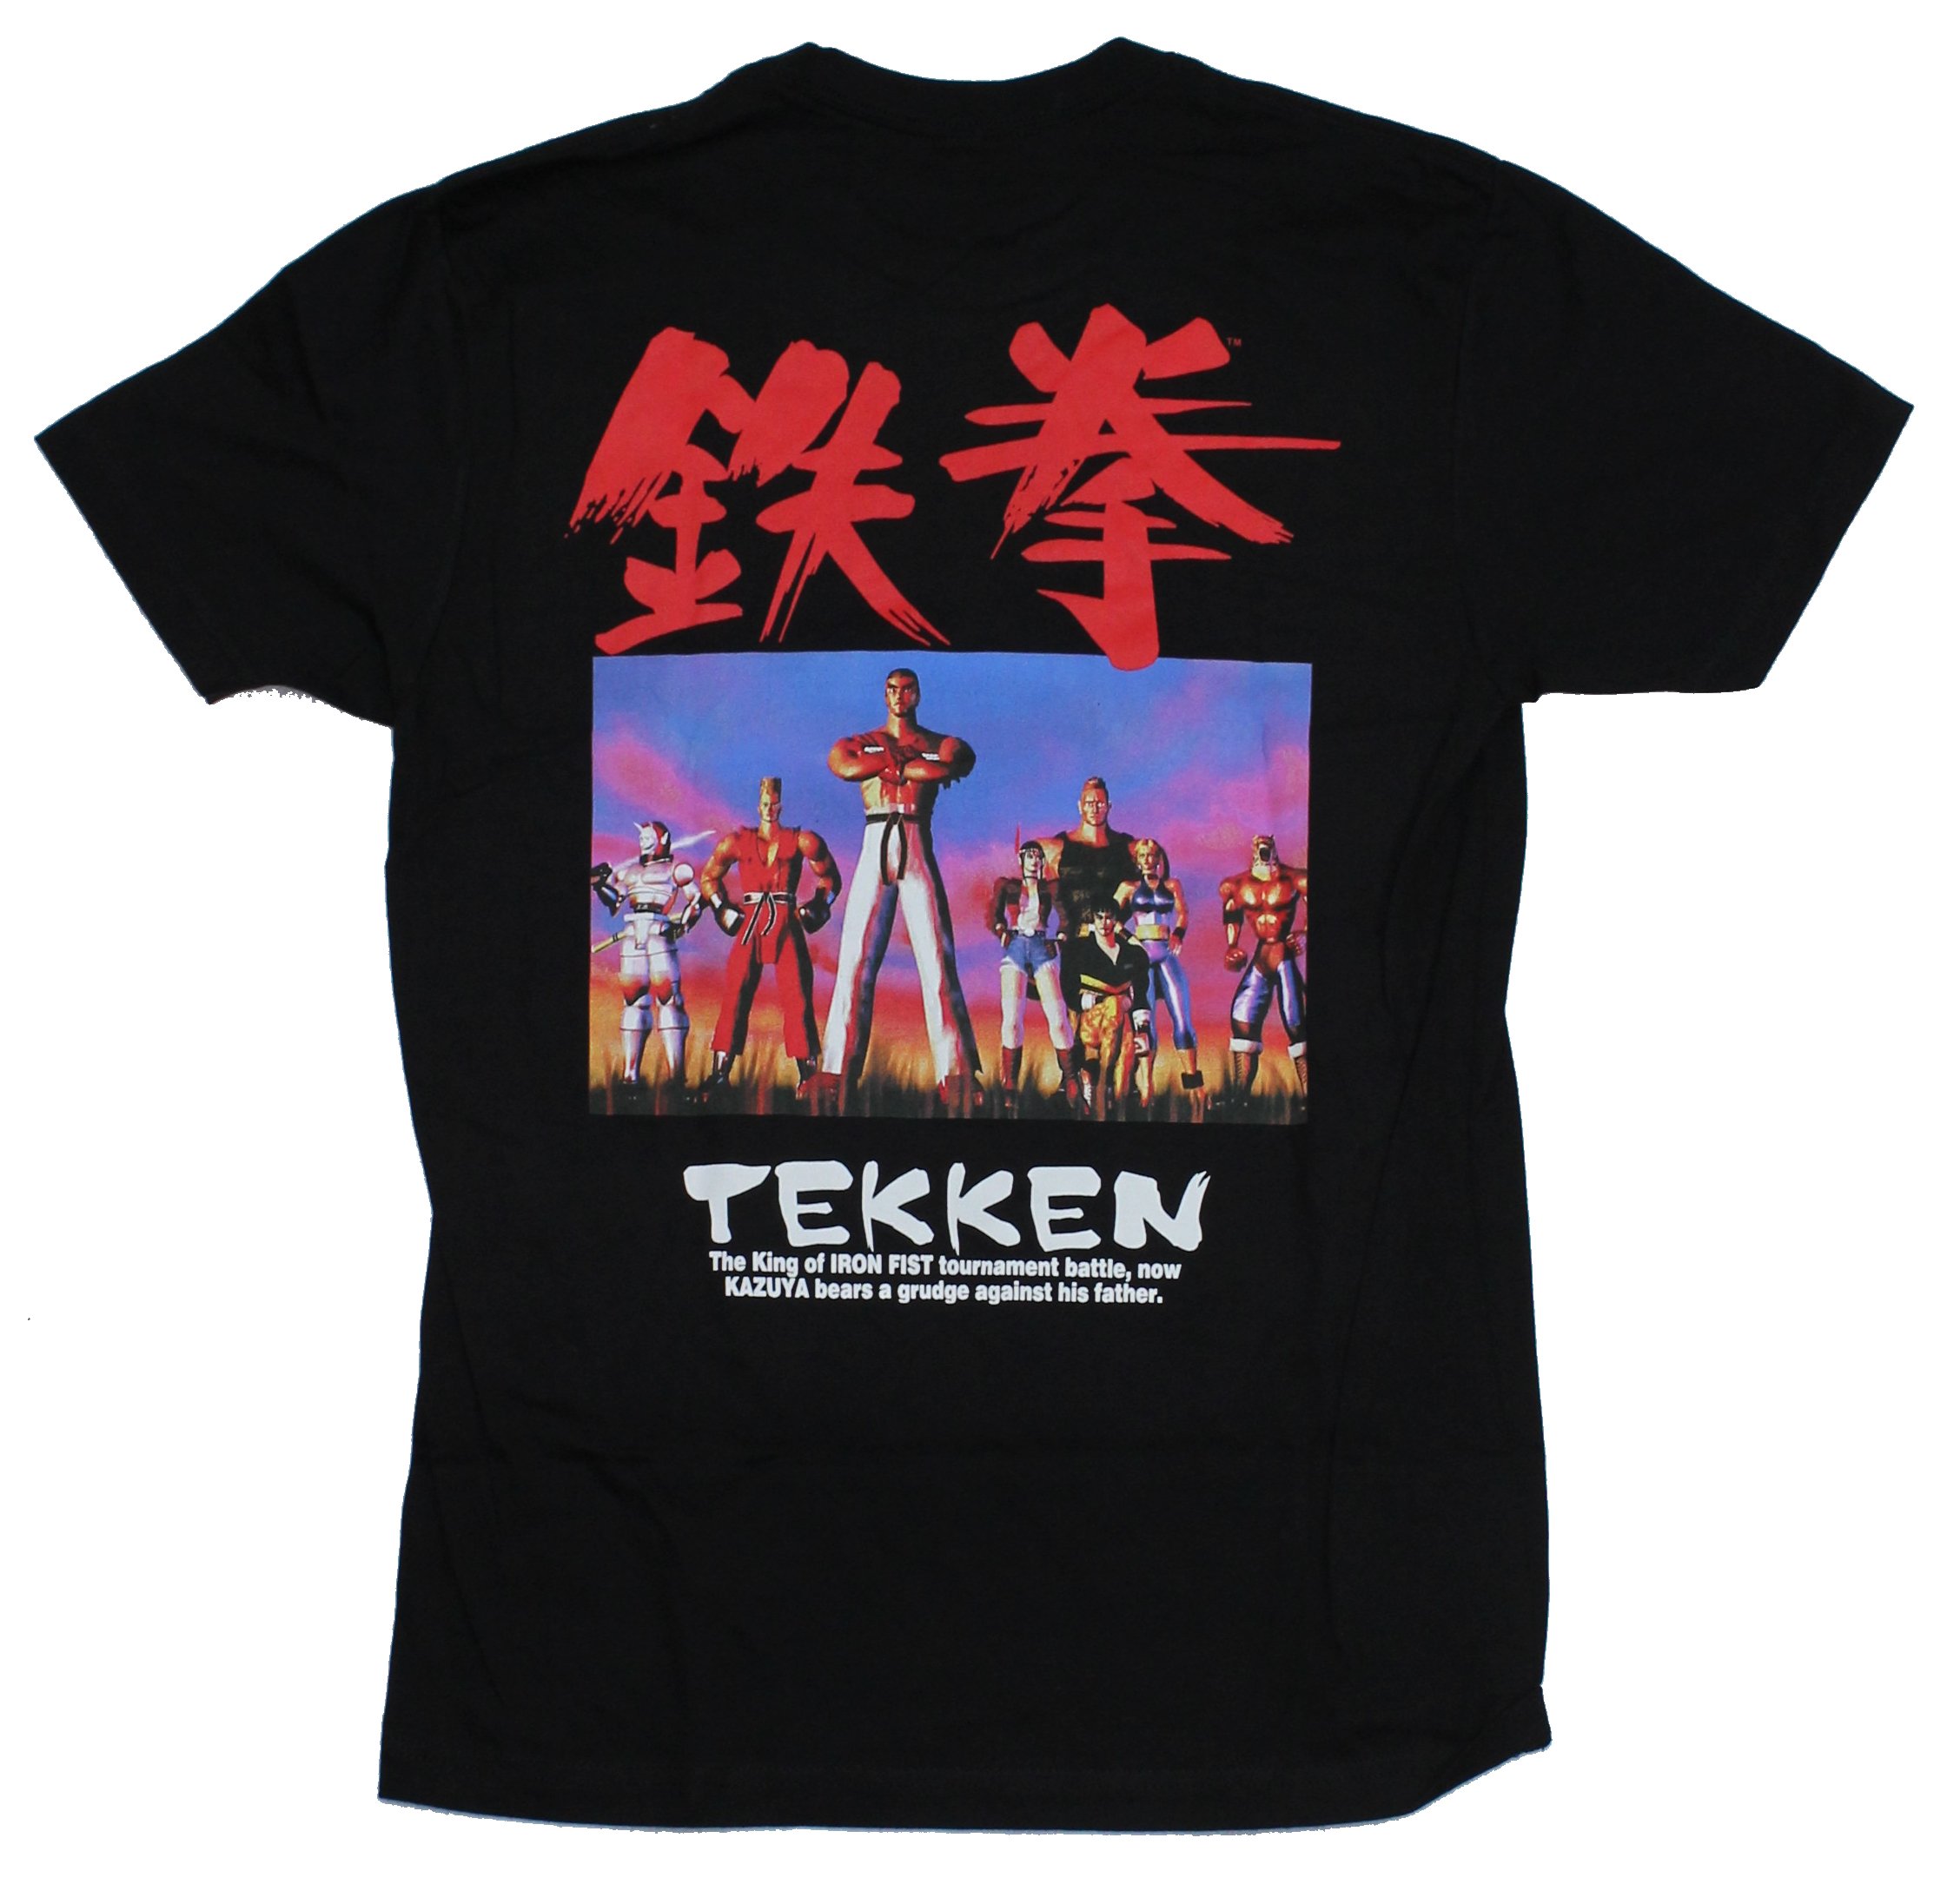 Tekken Mens T-Shirt - King of Iron Fist Original Game Image 2 Sided | eBay